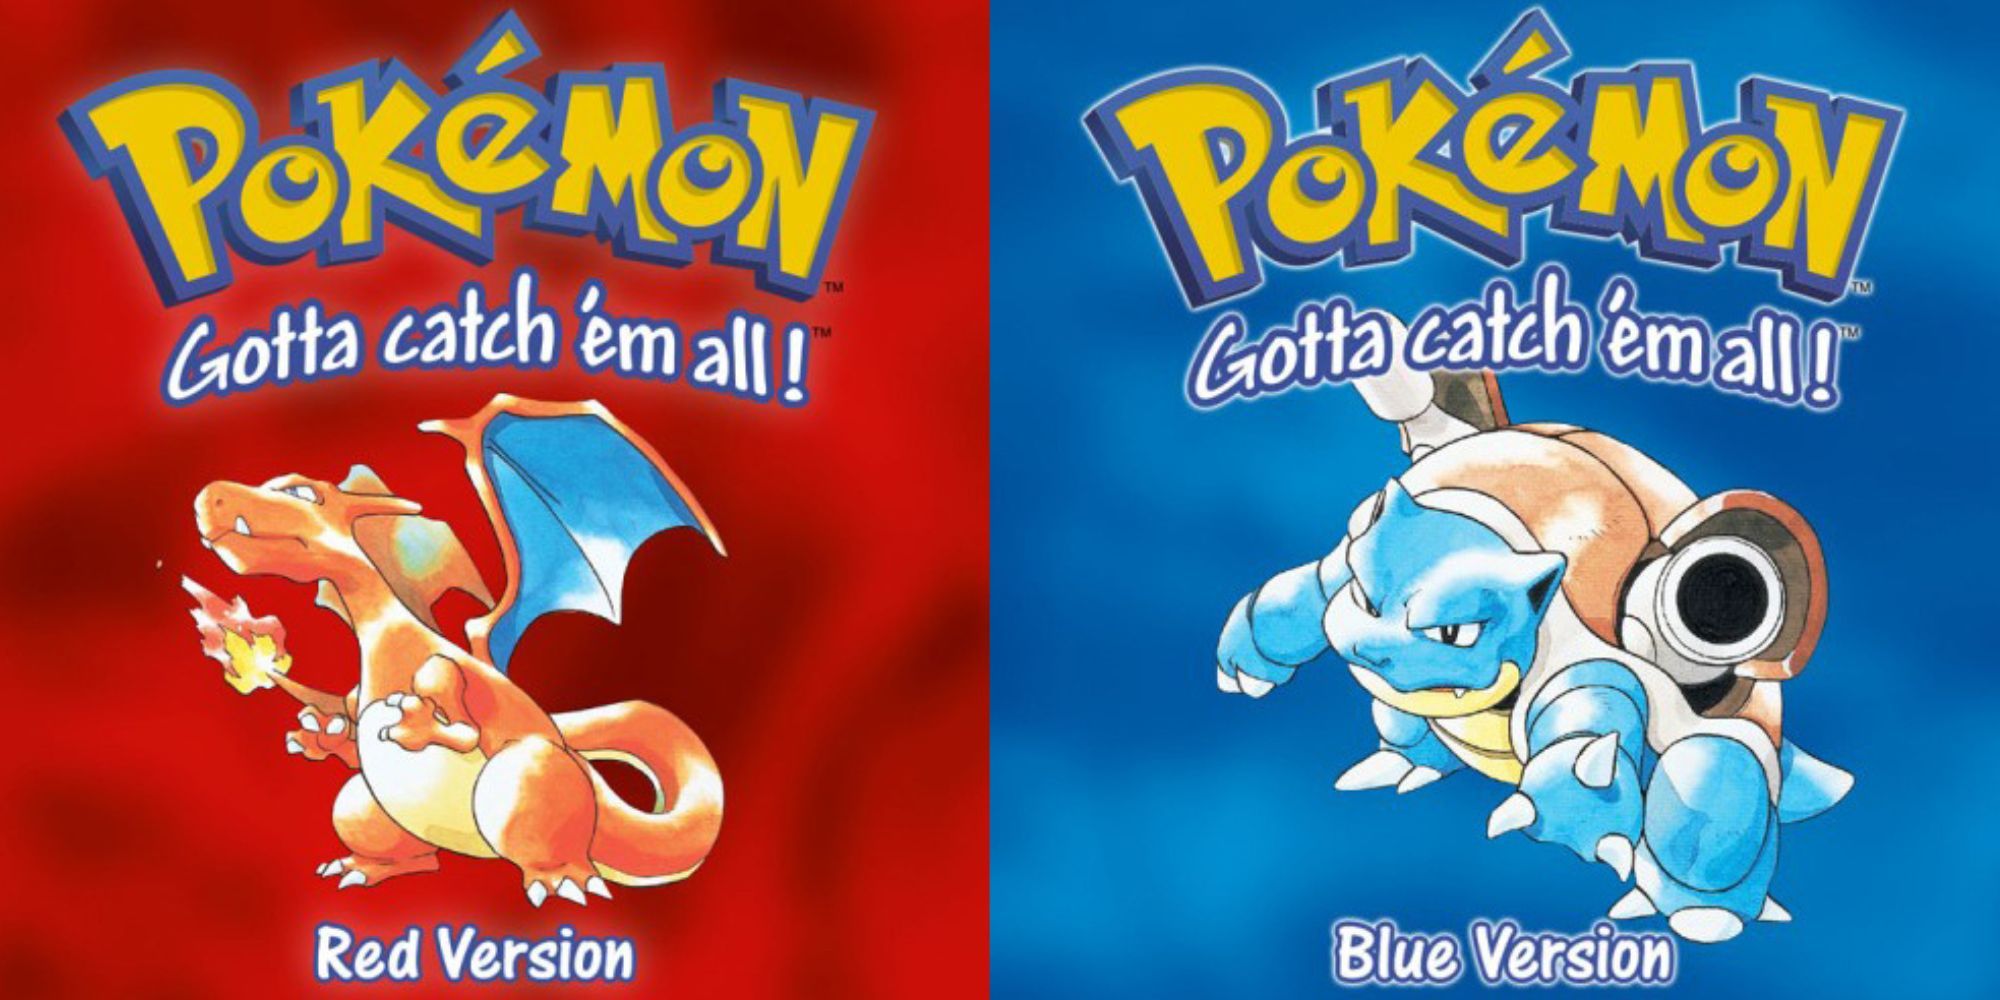 Pokémon Red and Pokémon Blue cover art